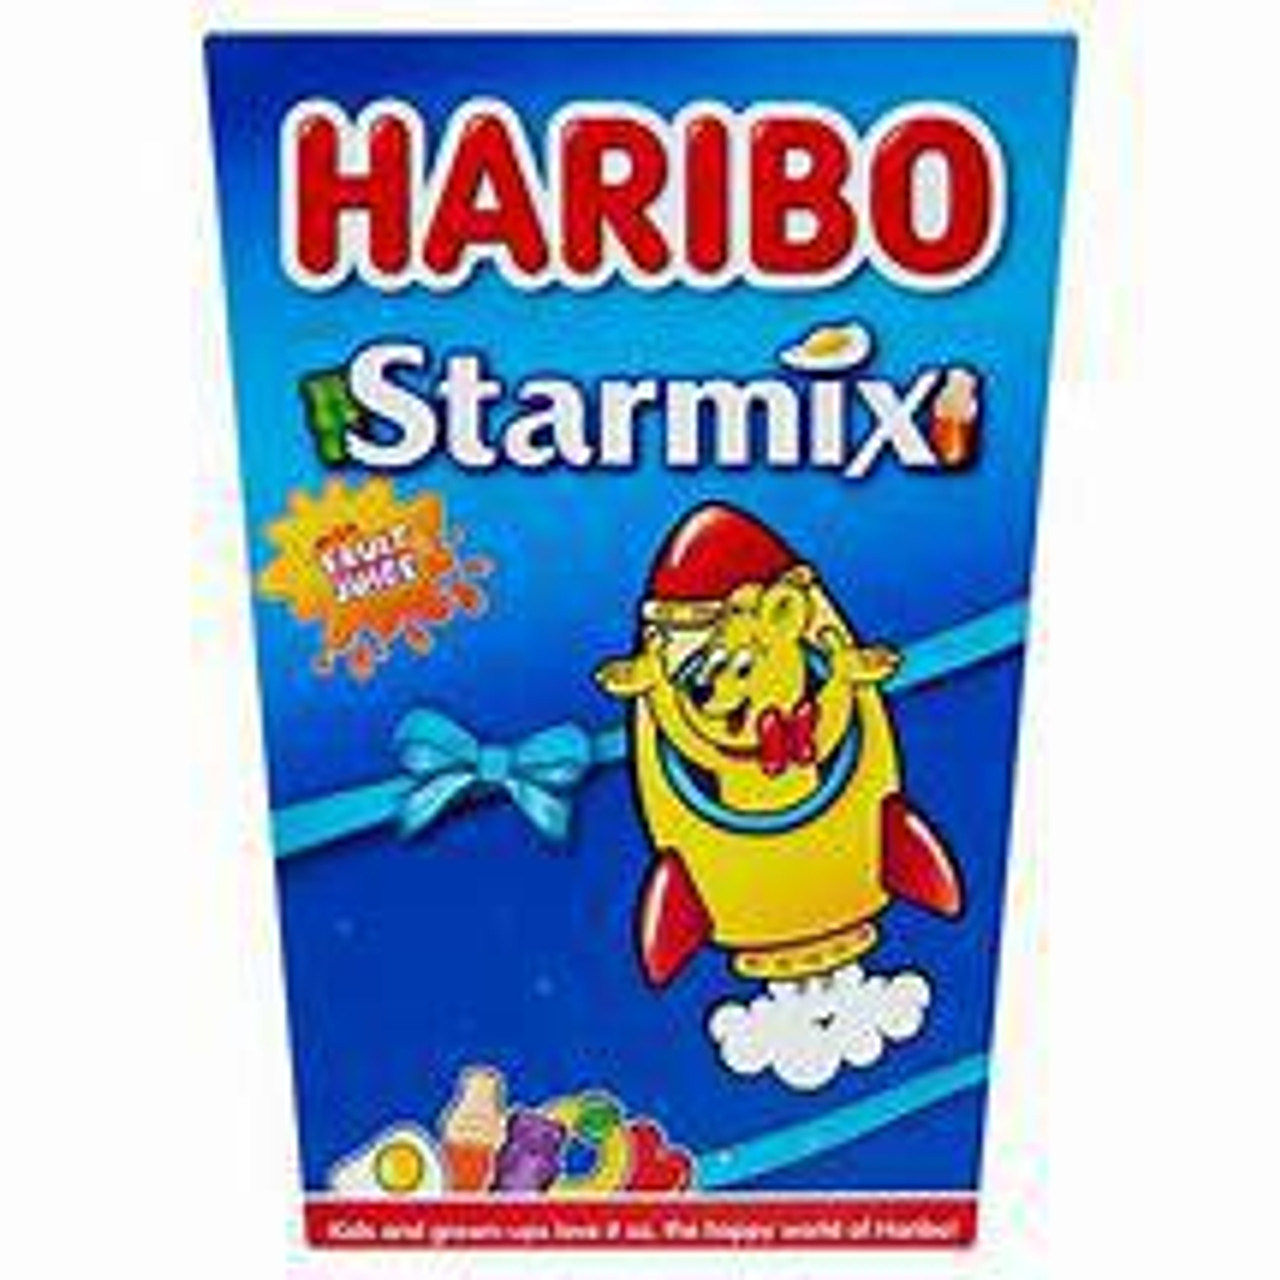 Haribo - Starmix Carton, 380g